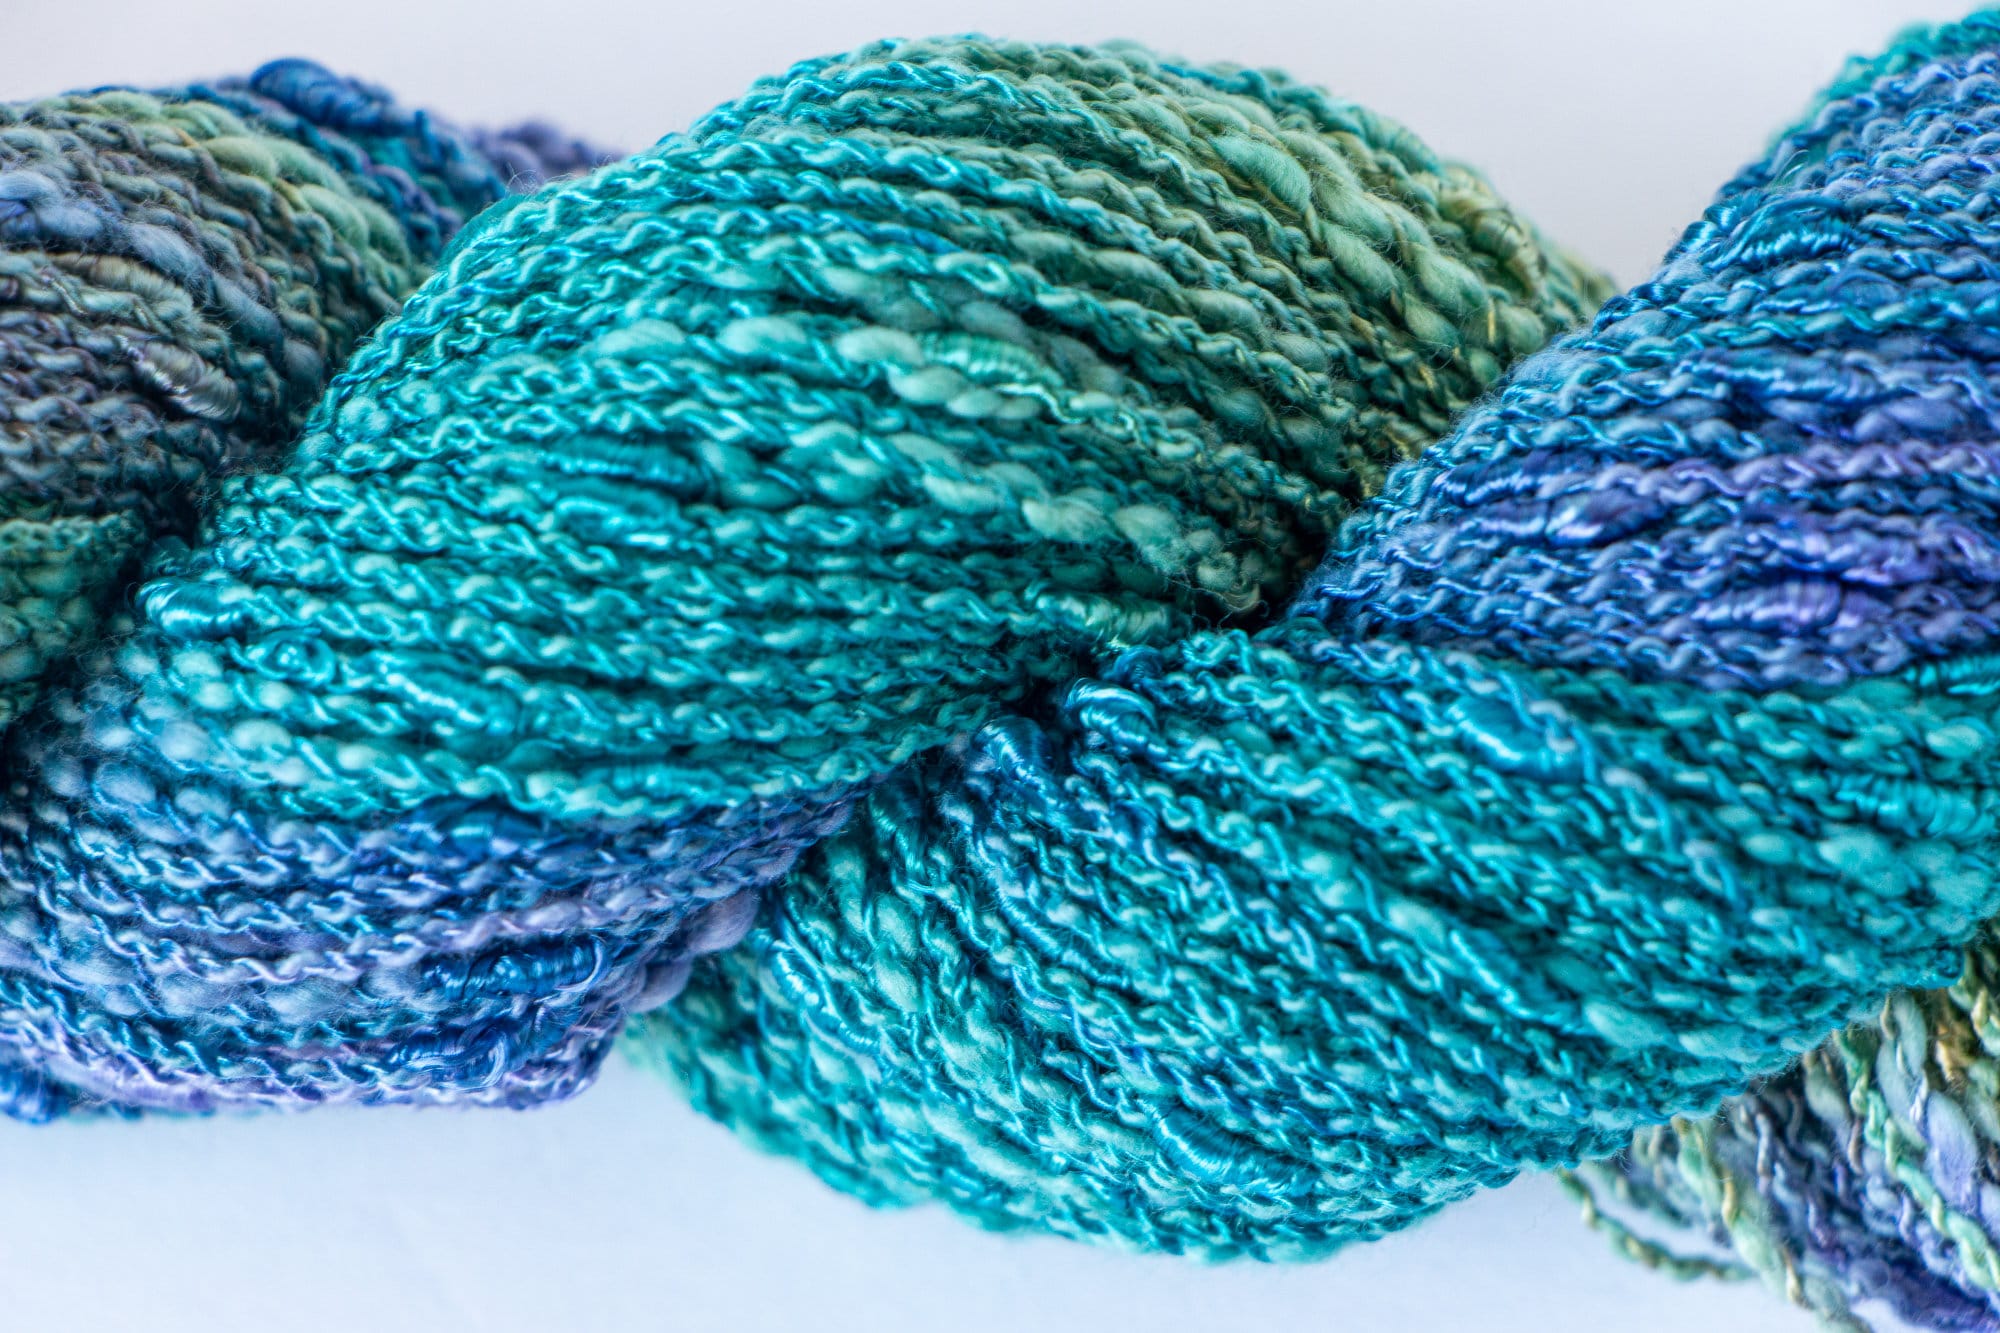 Rayon Cotton Yarn Saguaro 225 Yards Mary Gavan Yarns Textured Yarn Teal  Purple Multi Color Yarn Knitters Yarn Knit 